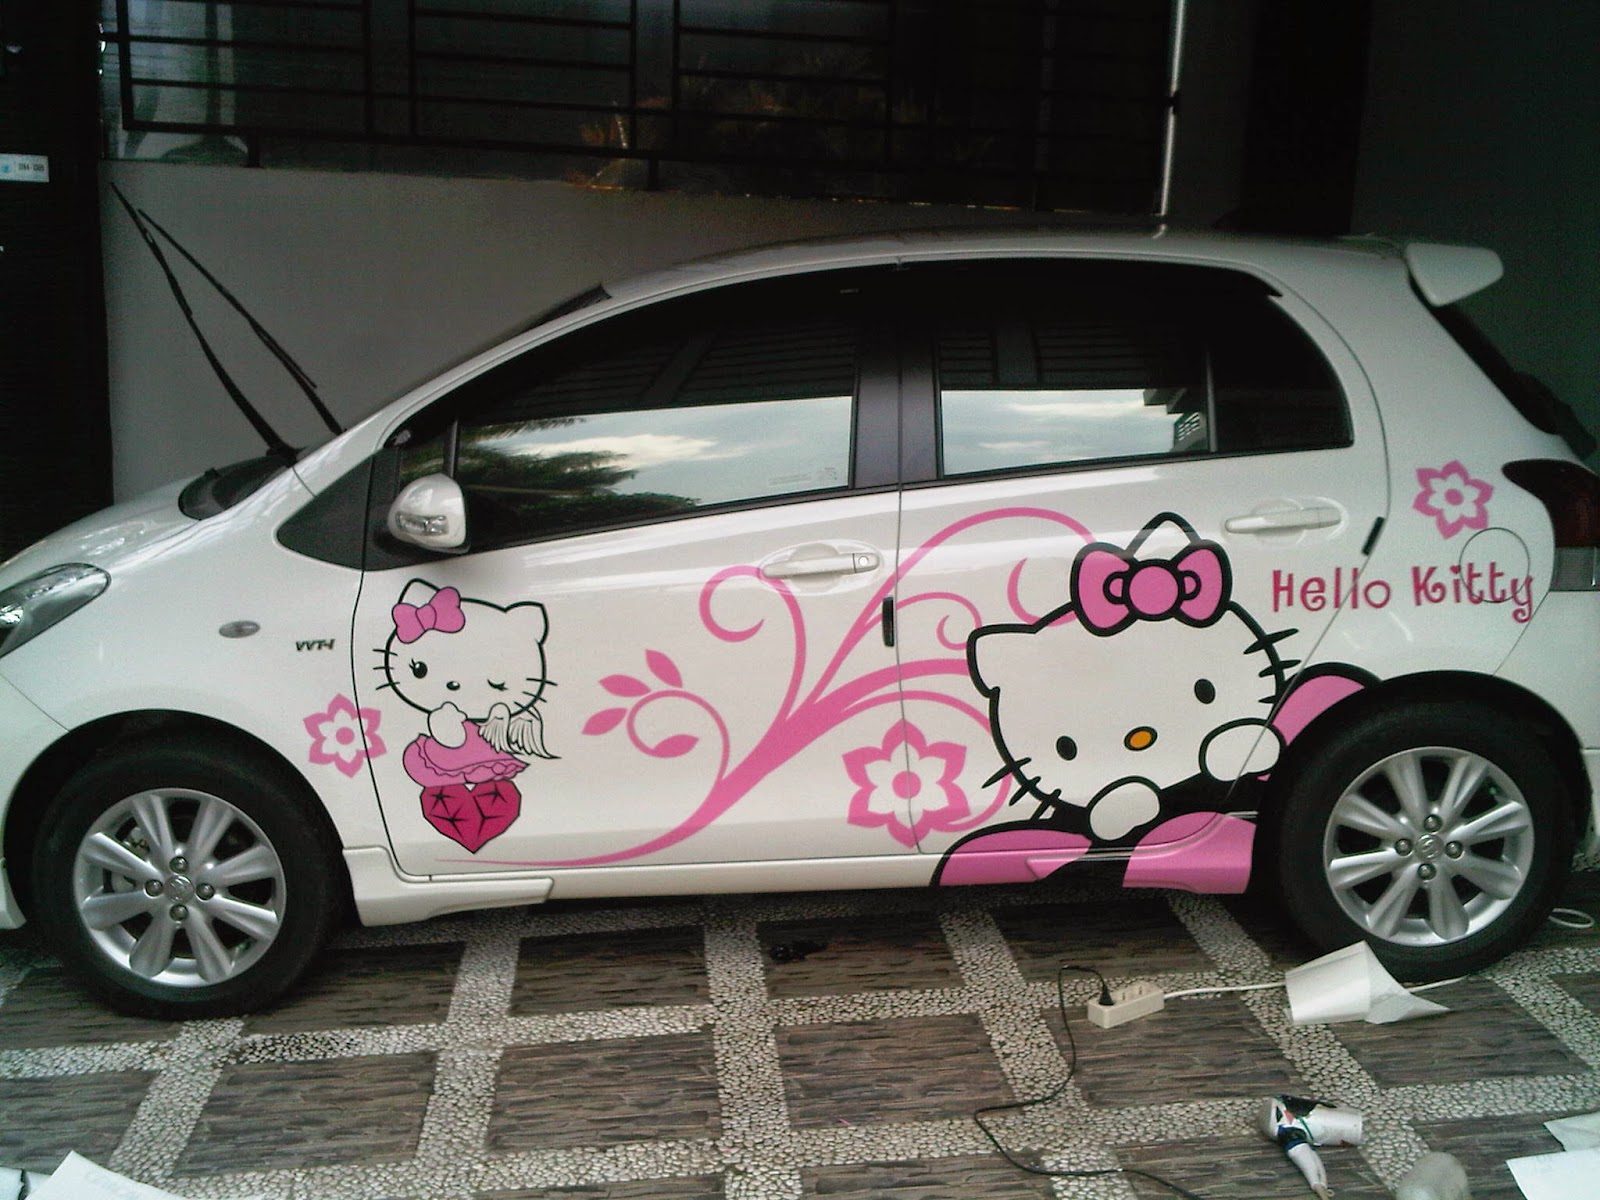 Download 80 Modifikasi Mobil Avanza Hello Kitty Terupdate Modispik